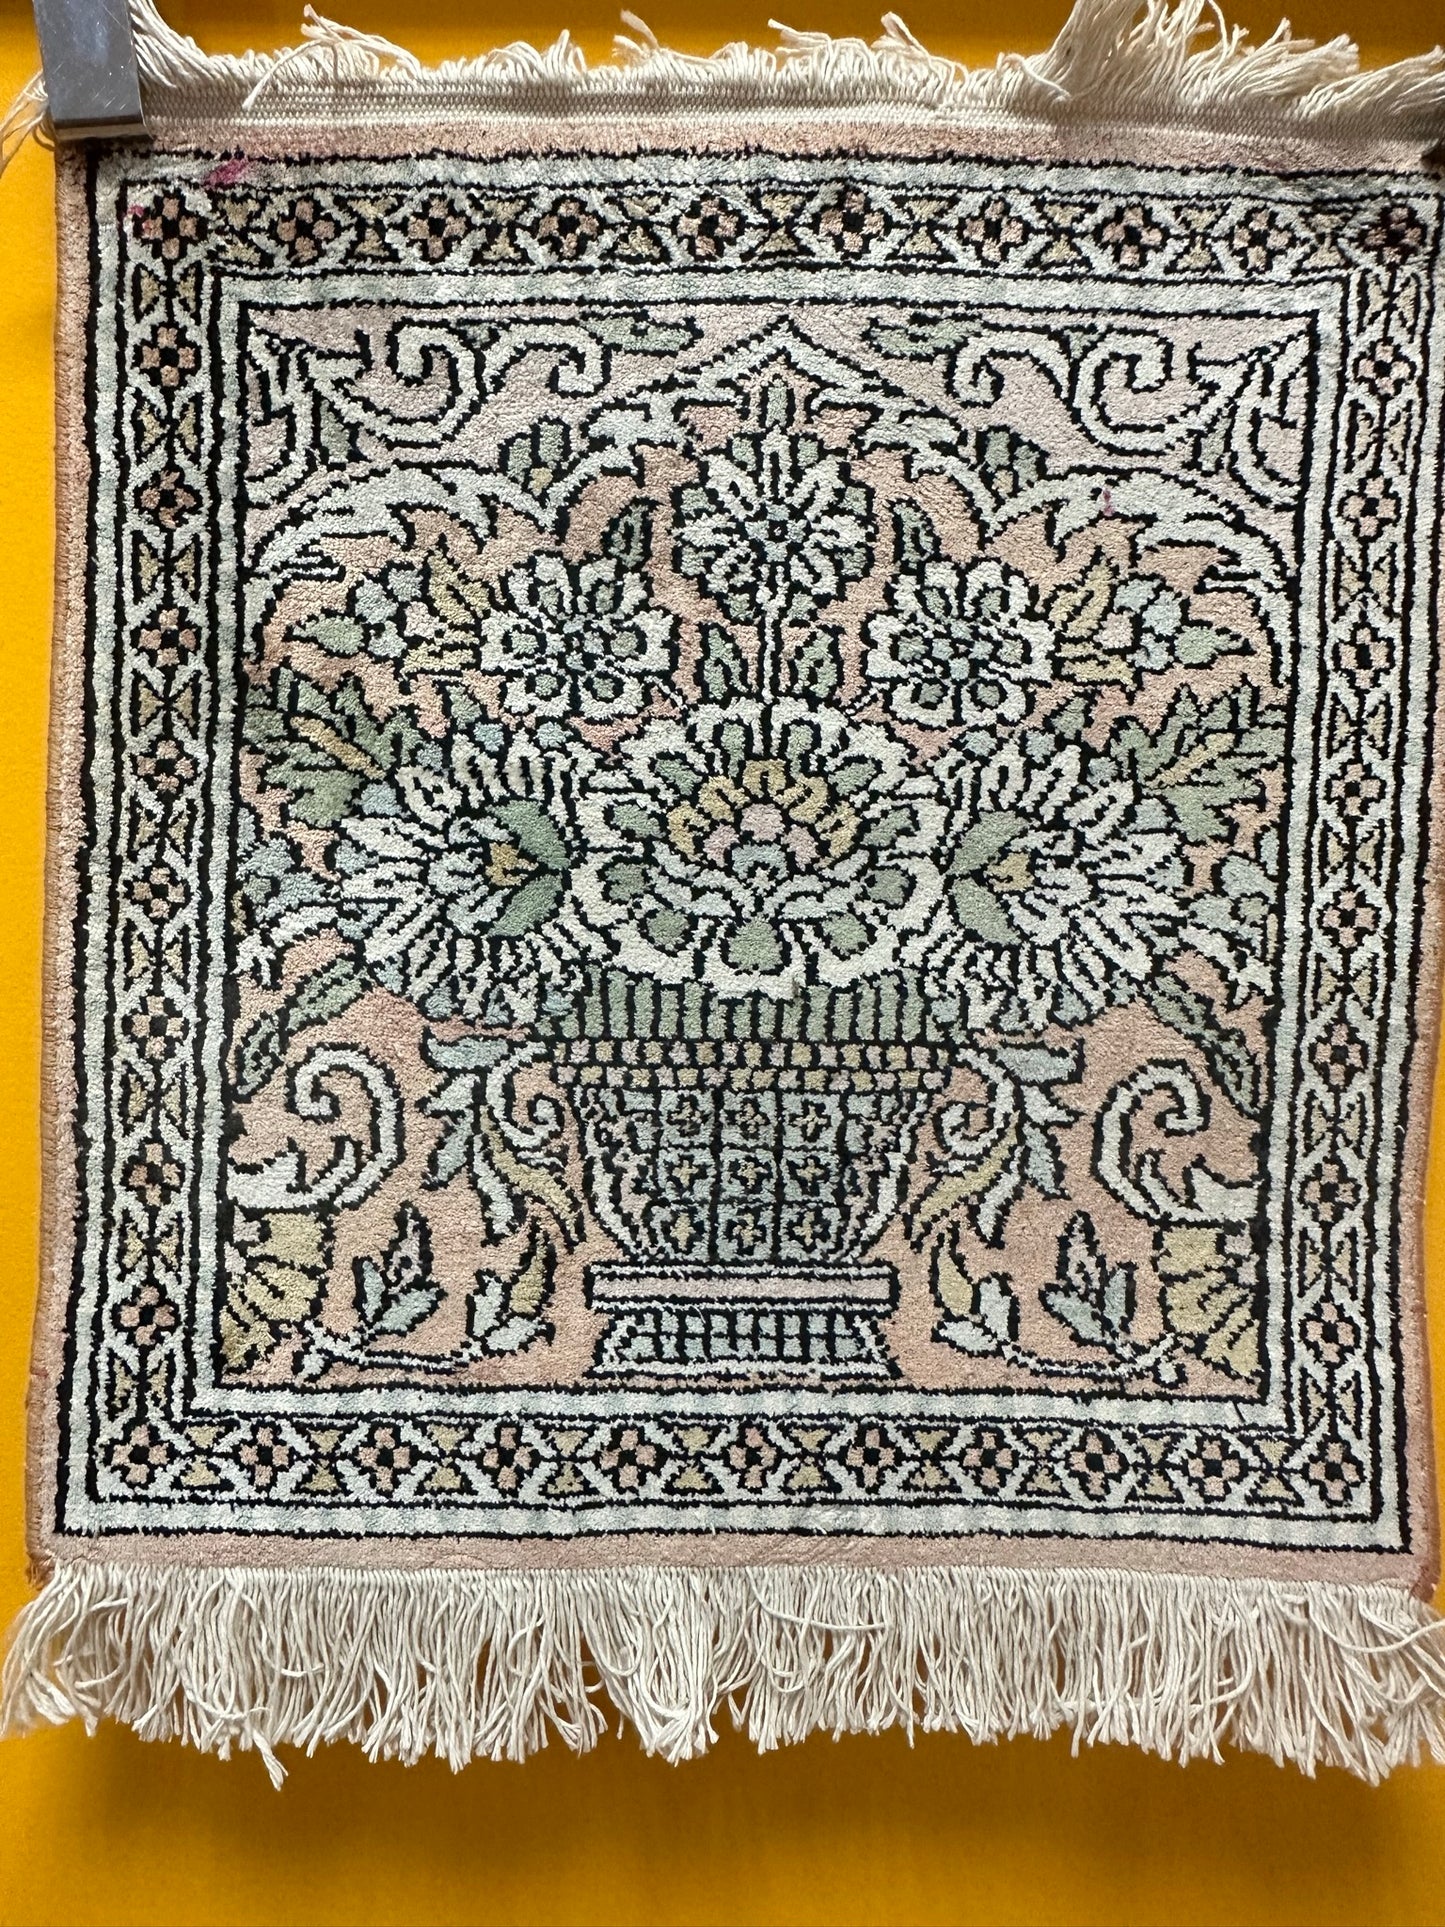 Handgeknüpfter Orientteppich Kaschmir Seide mit Lebensbaum Muster 50x50cm